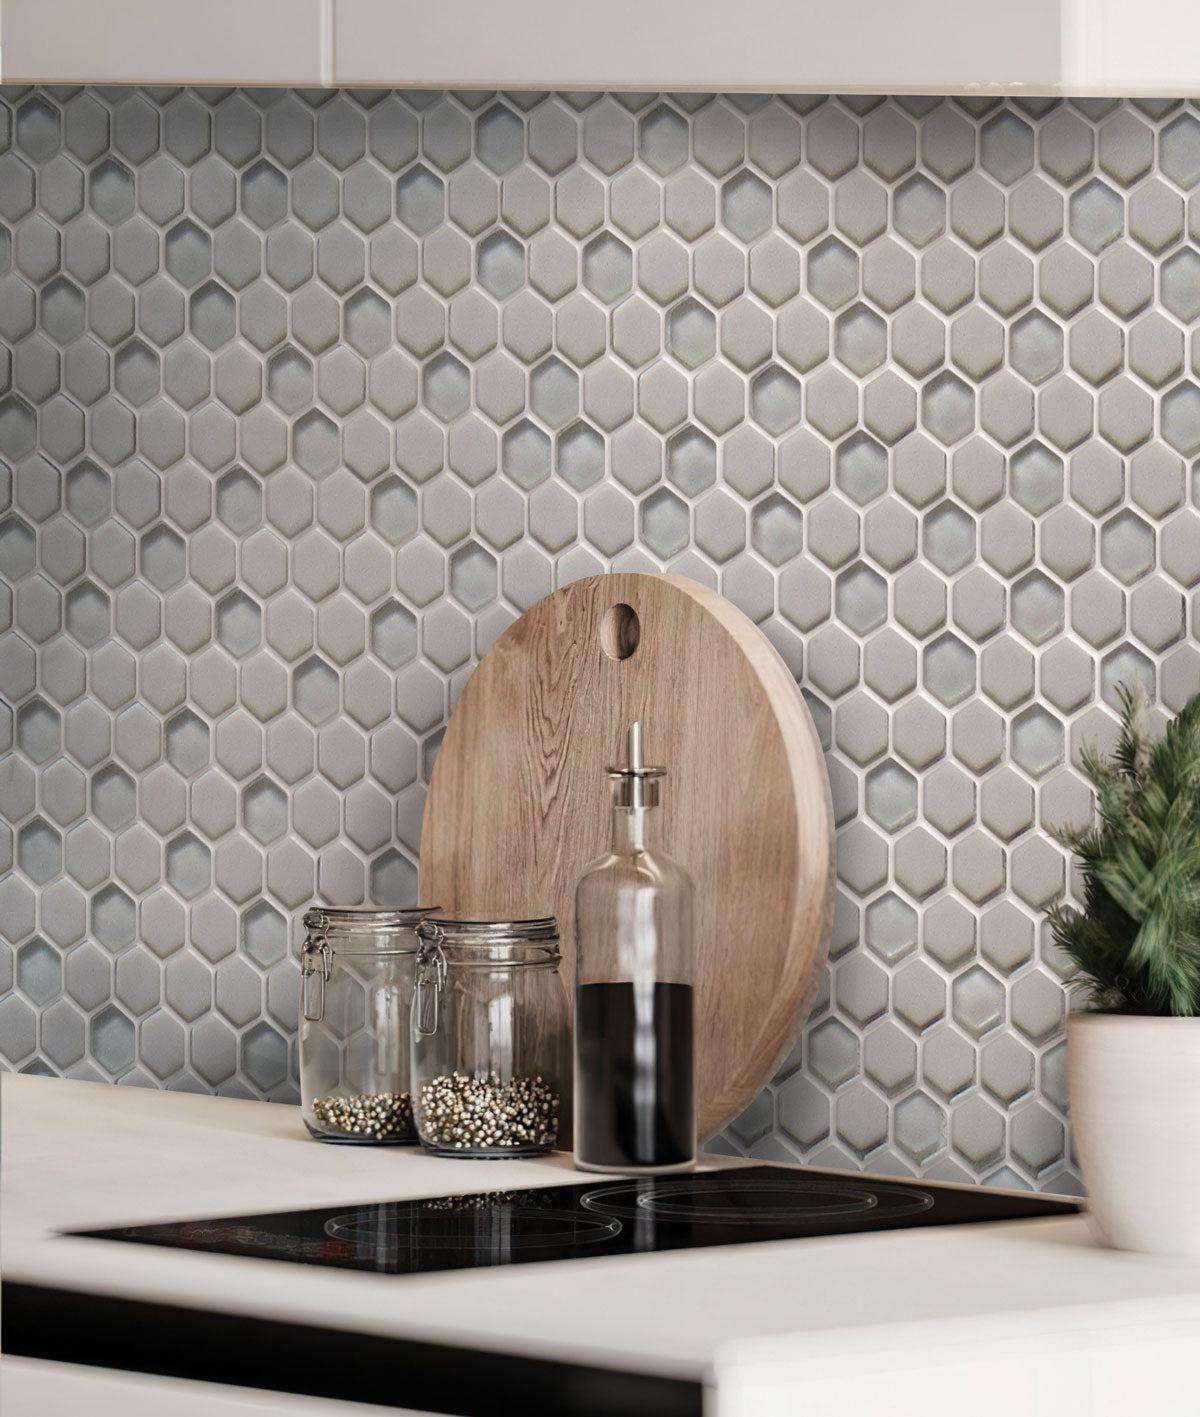 Grey Recycled Glass Hexagon Mosaic Tile Kitchen Backsplash